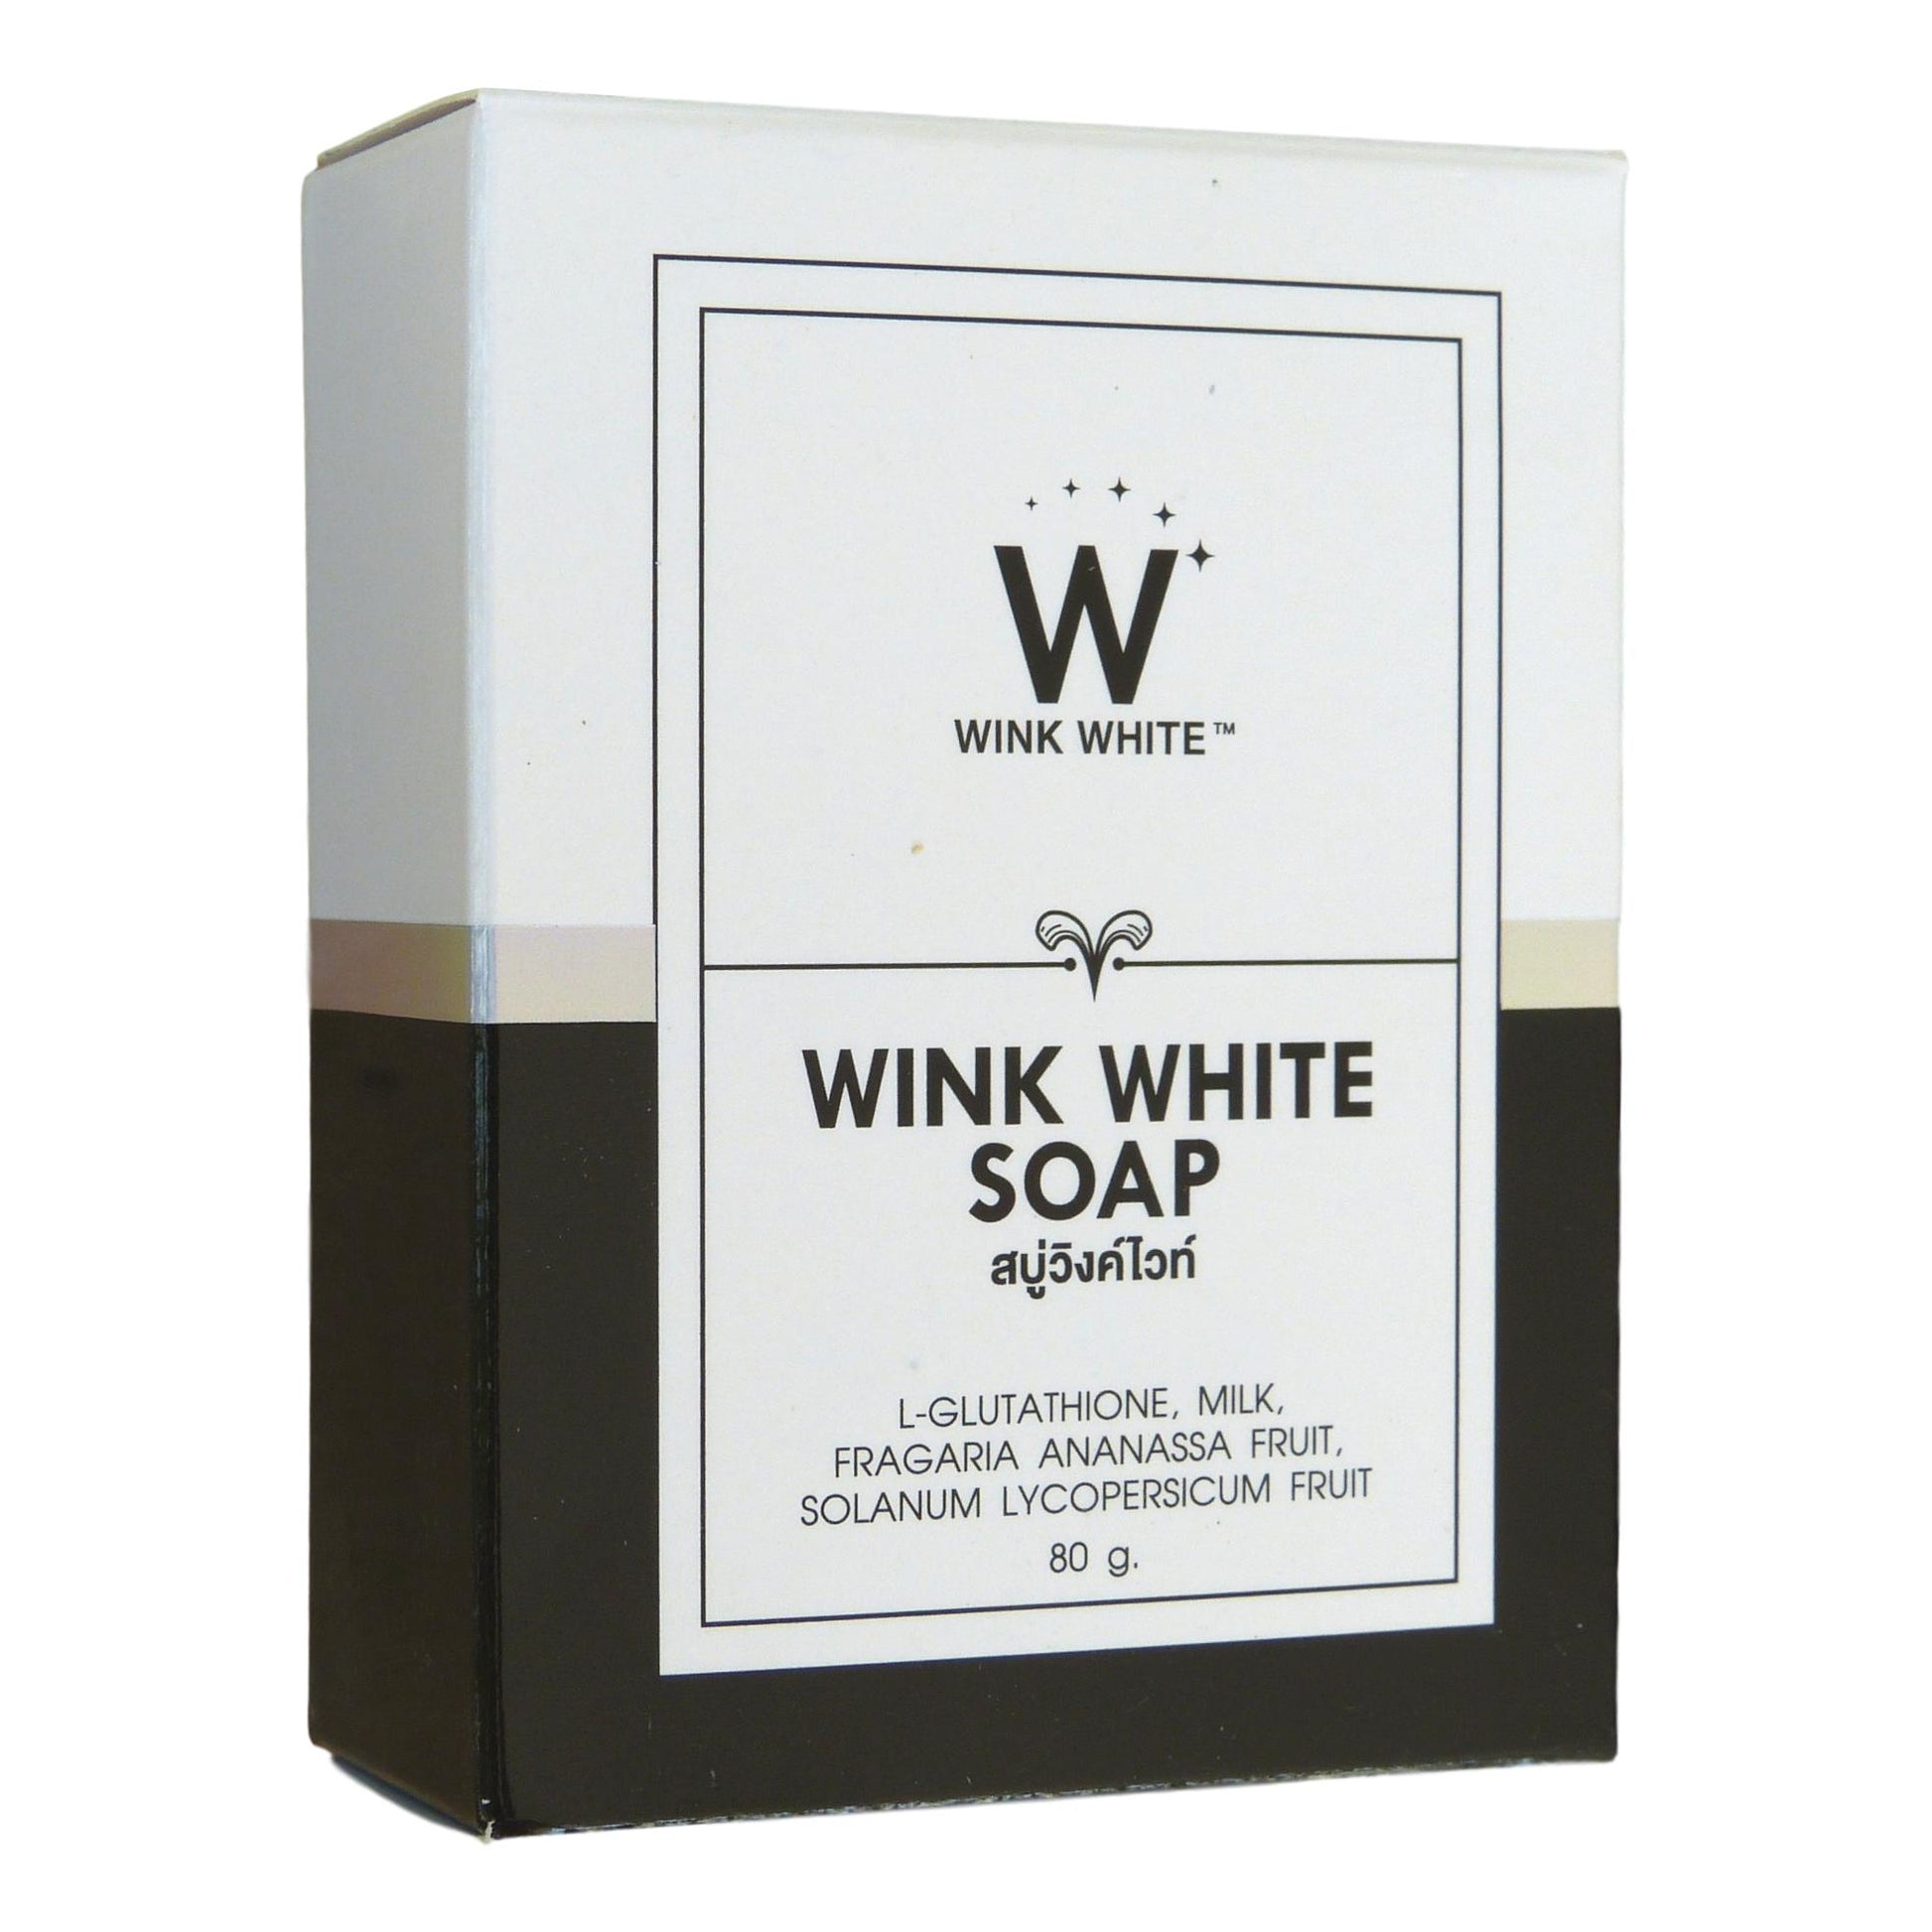 Gluta Glutathione Pure Soap Whitening Bleaching Anti-aging BY WINK WHITE